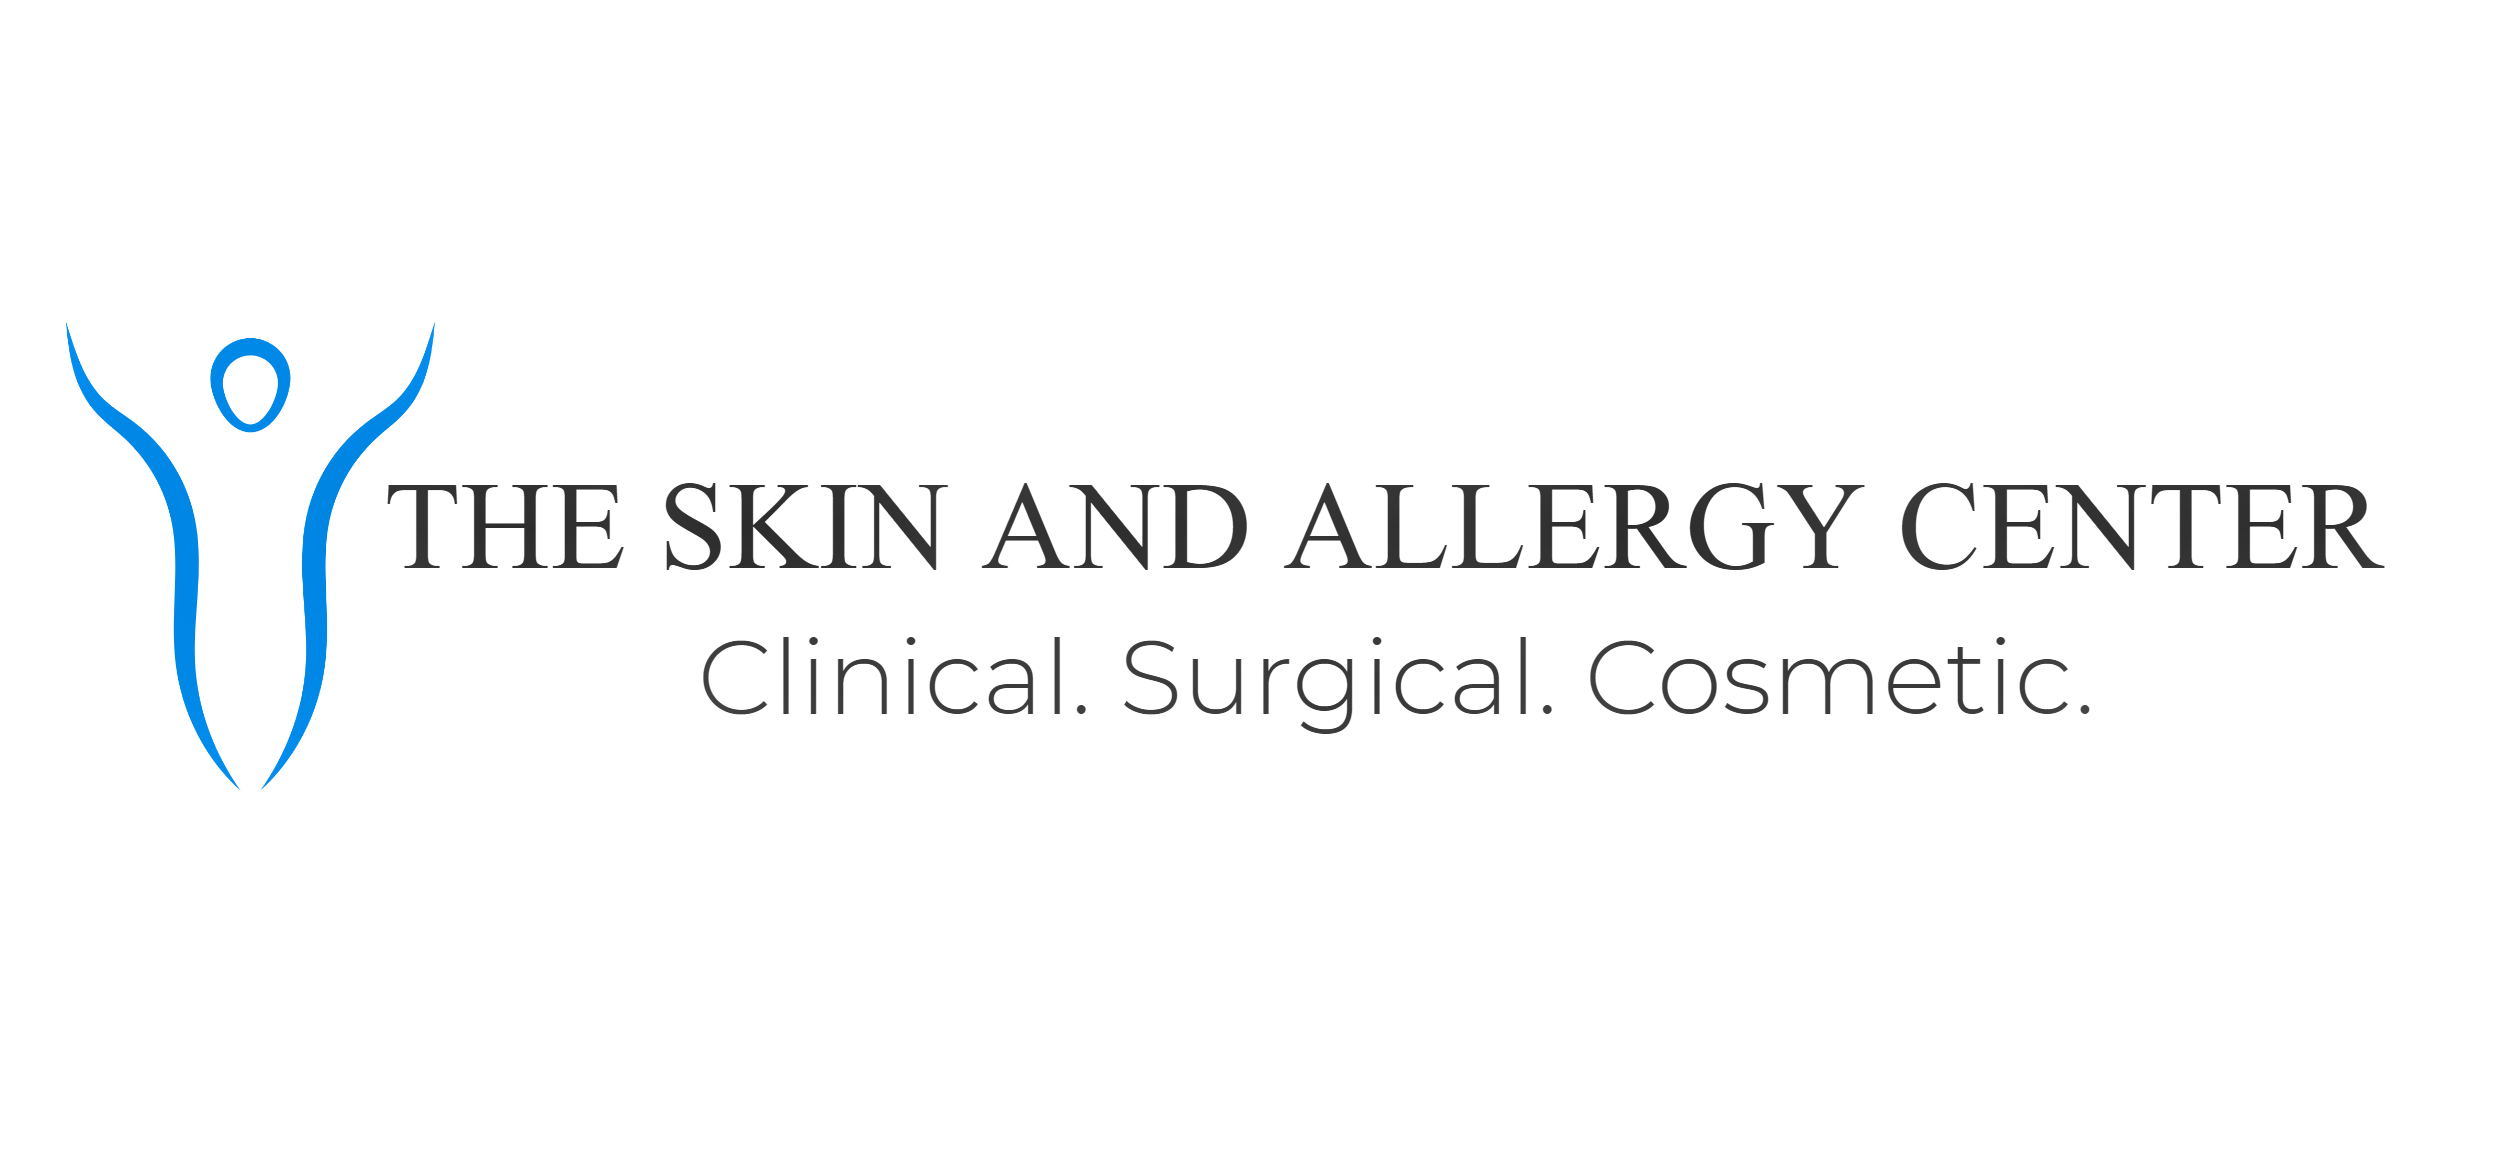 Skin and allergy logo MAIN.